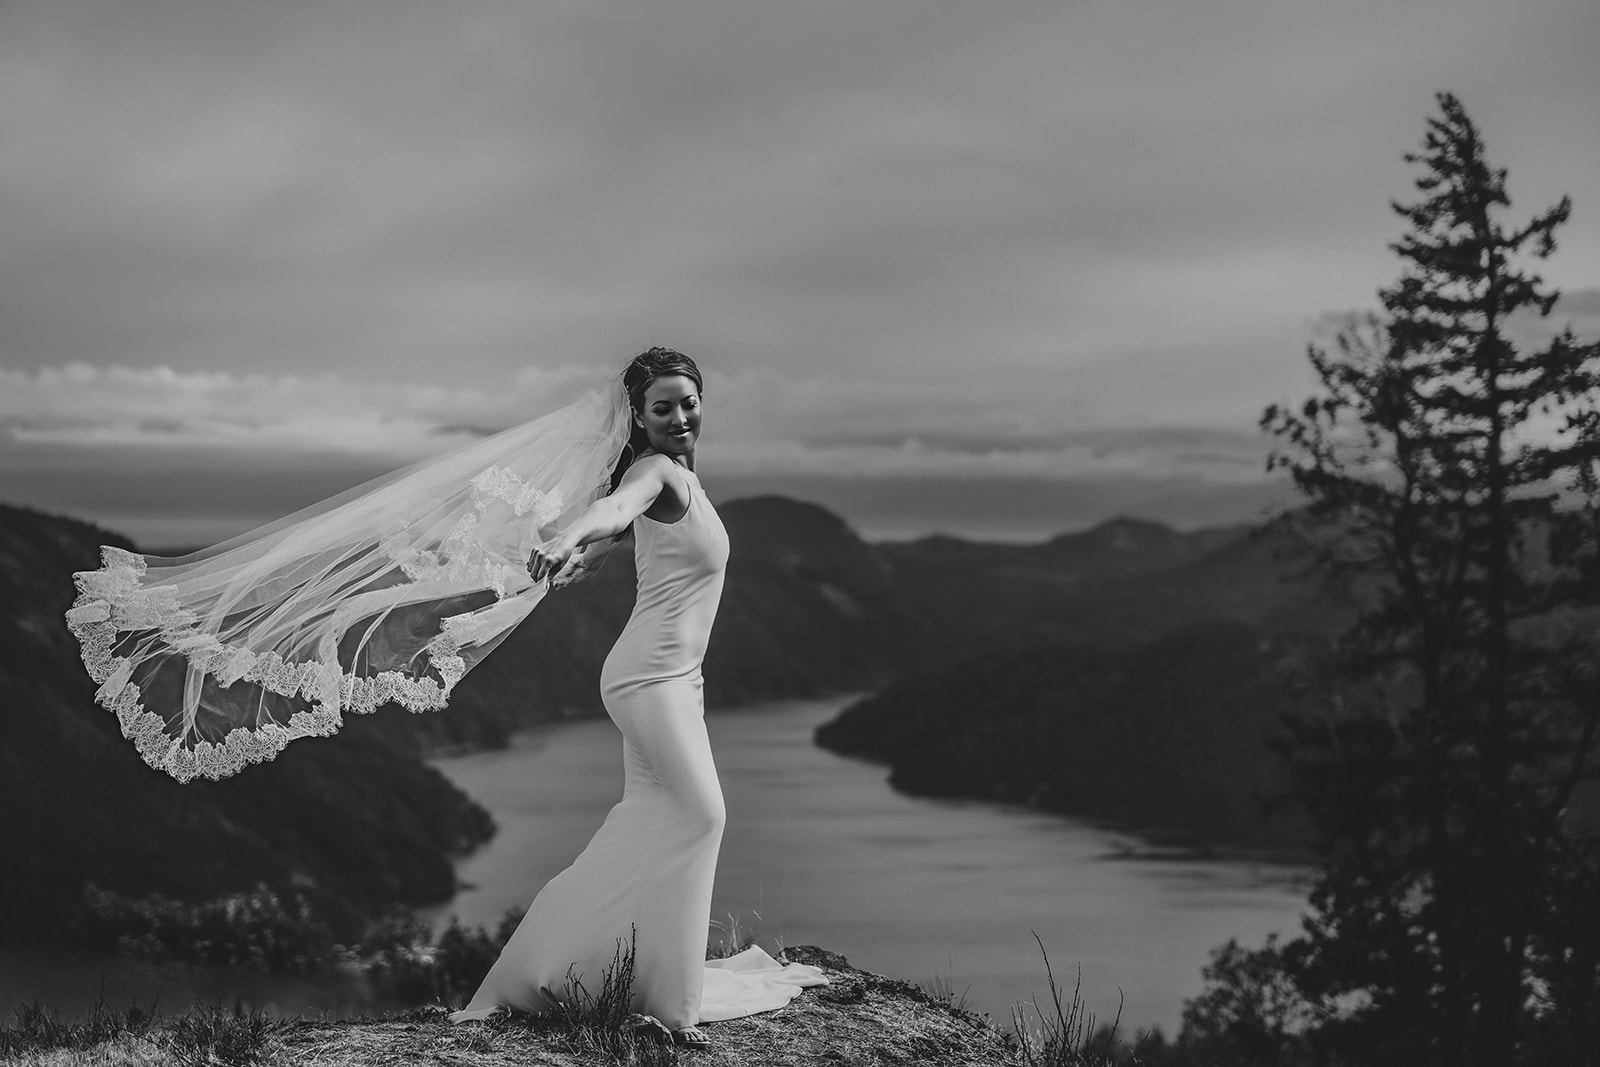 artistic black & white wedding photography, Vancouver Island wedding photography by KGOODPHOTO